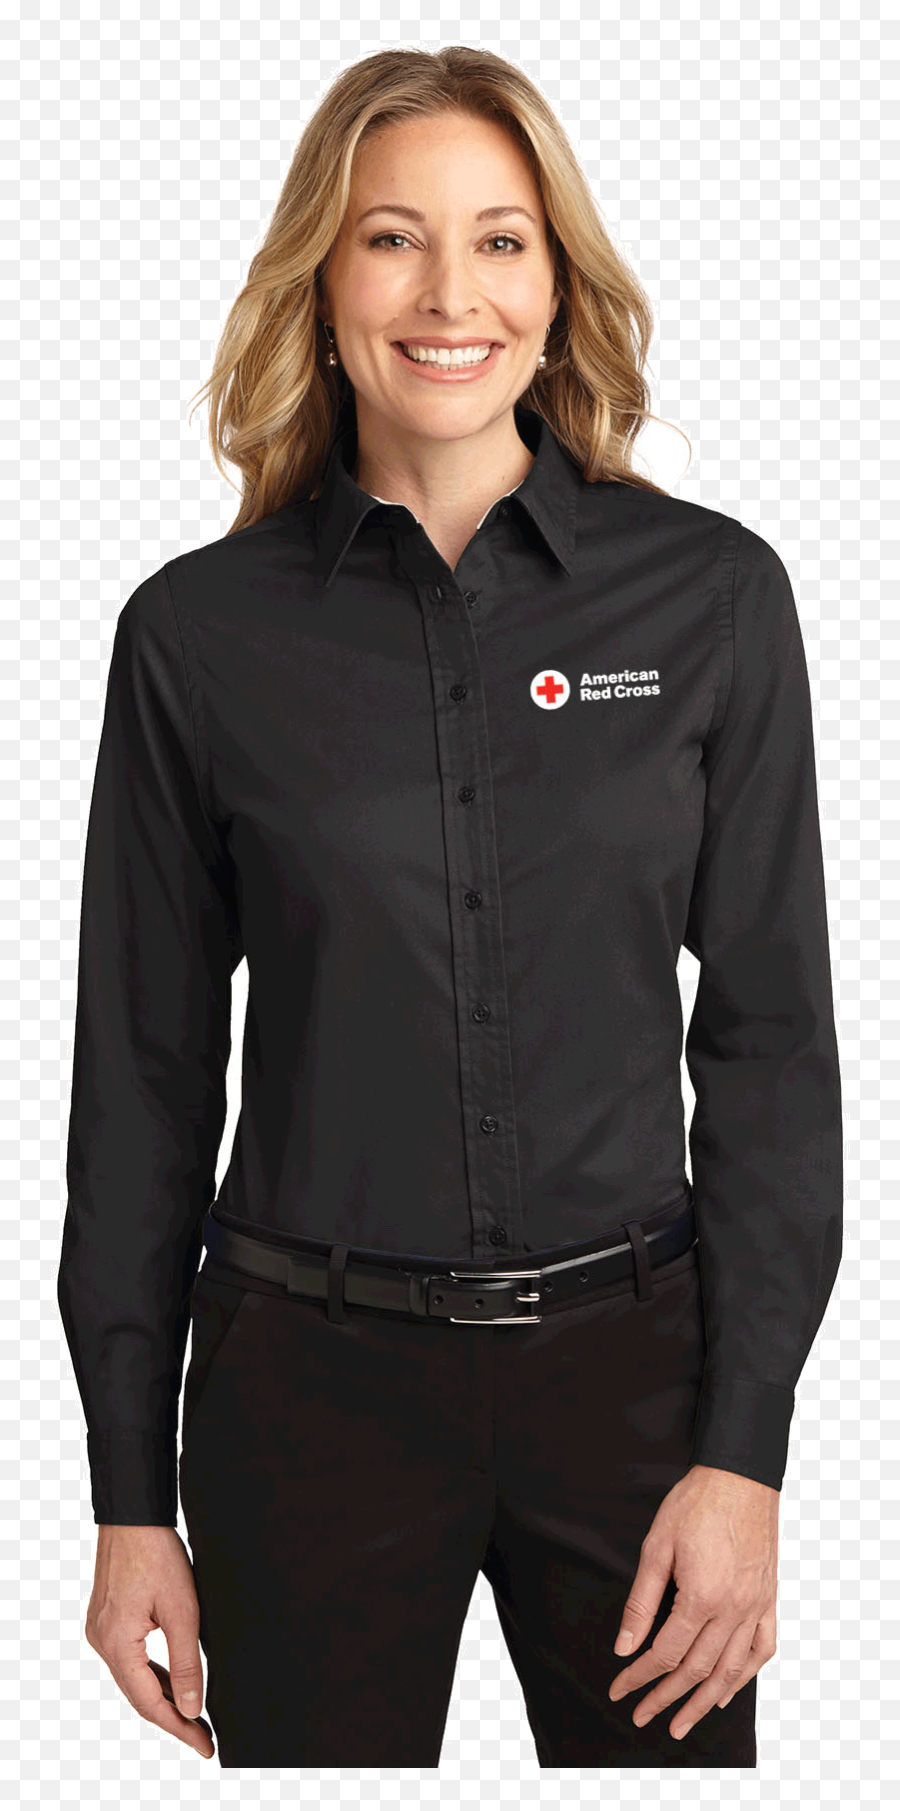 Womenu0027s Button Up Oxford Dress Shirt With American Red Cross Logo - Light Purple Colour Shirt For Ladies Emoji,Red Cross Logo